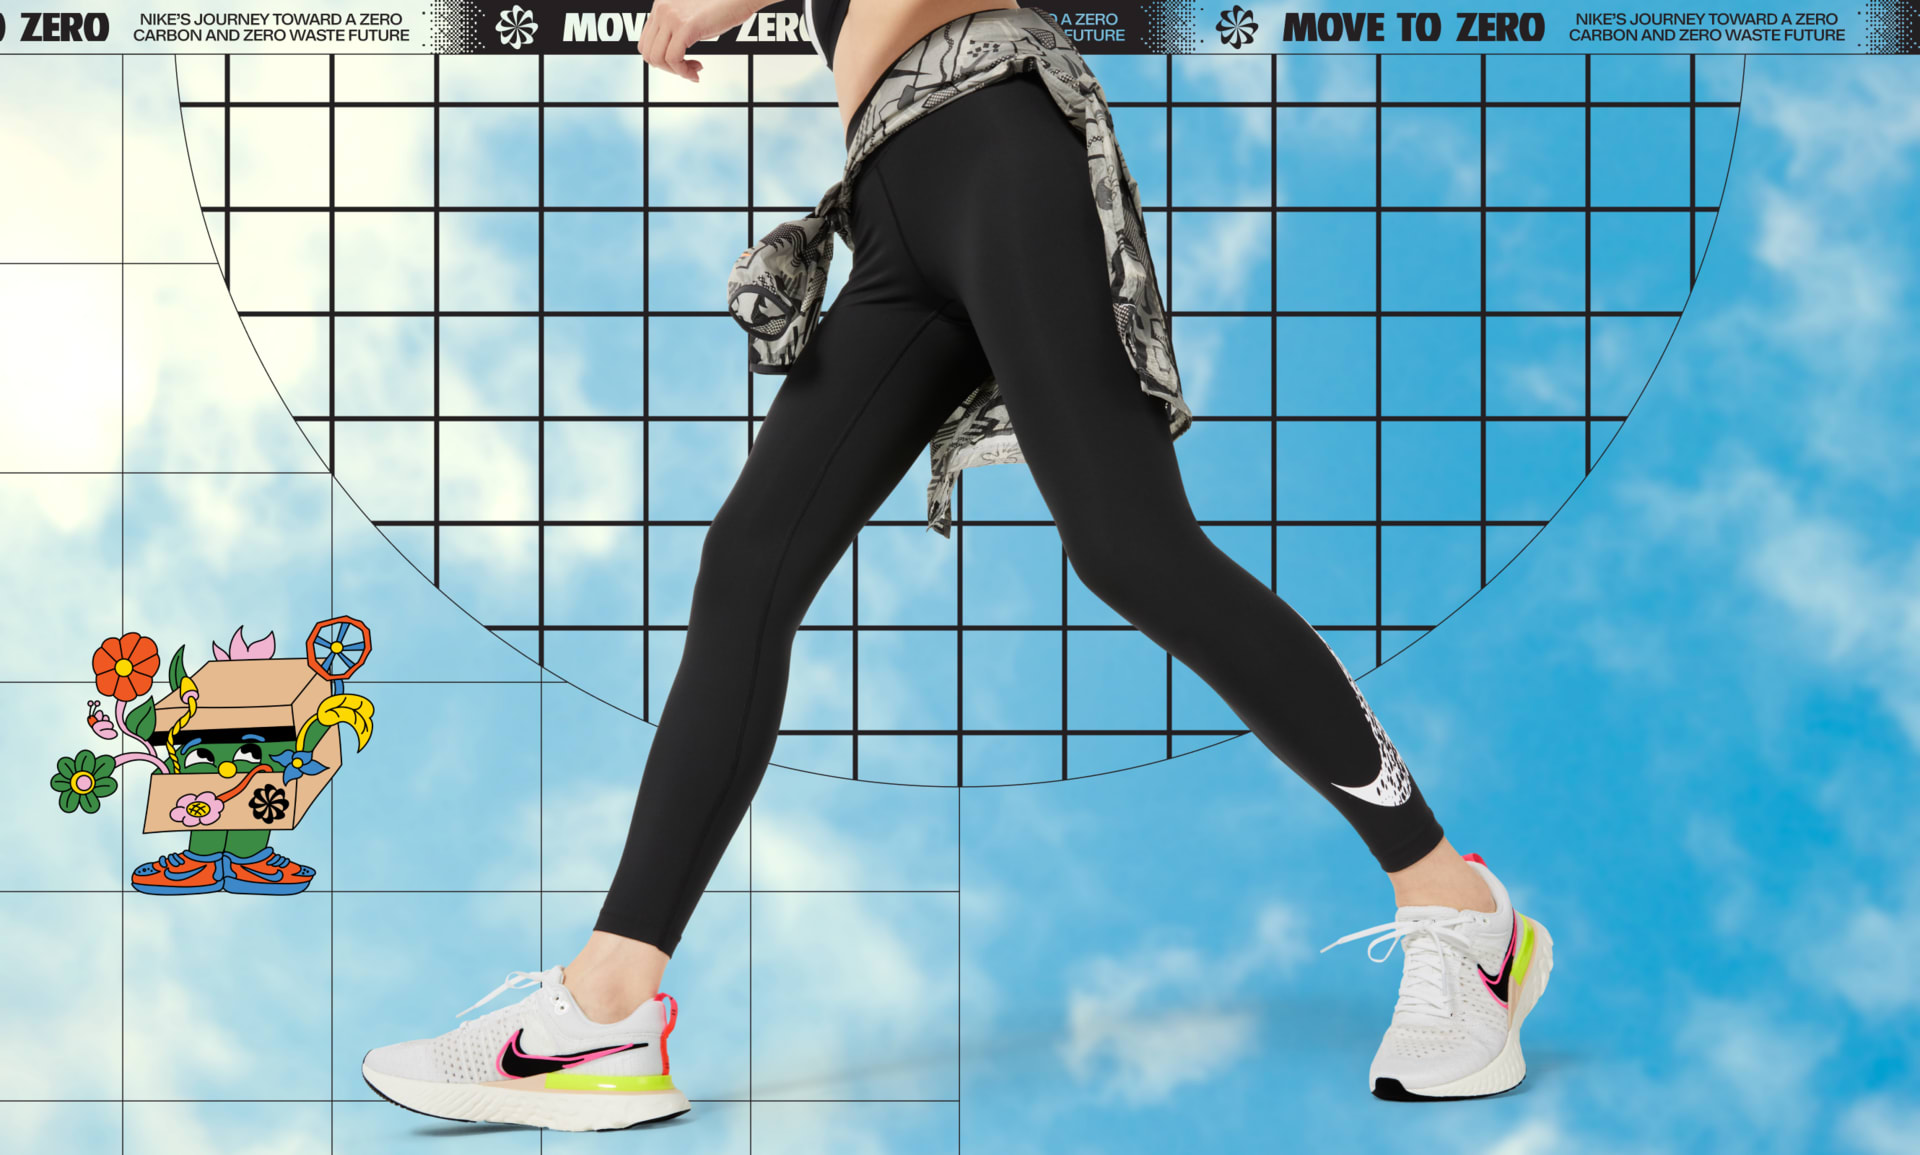 Nike Swoosh Run Women's Mid-Rise 7/8-Length Running Leggings. Nike CA